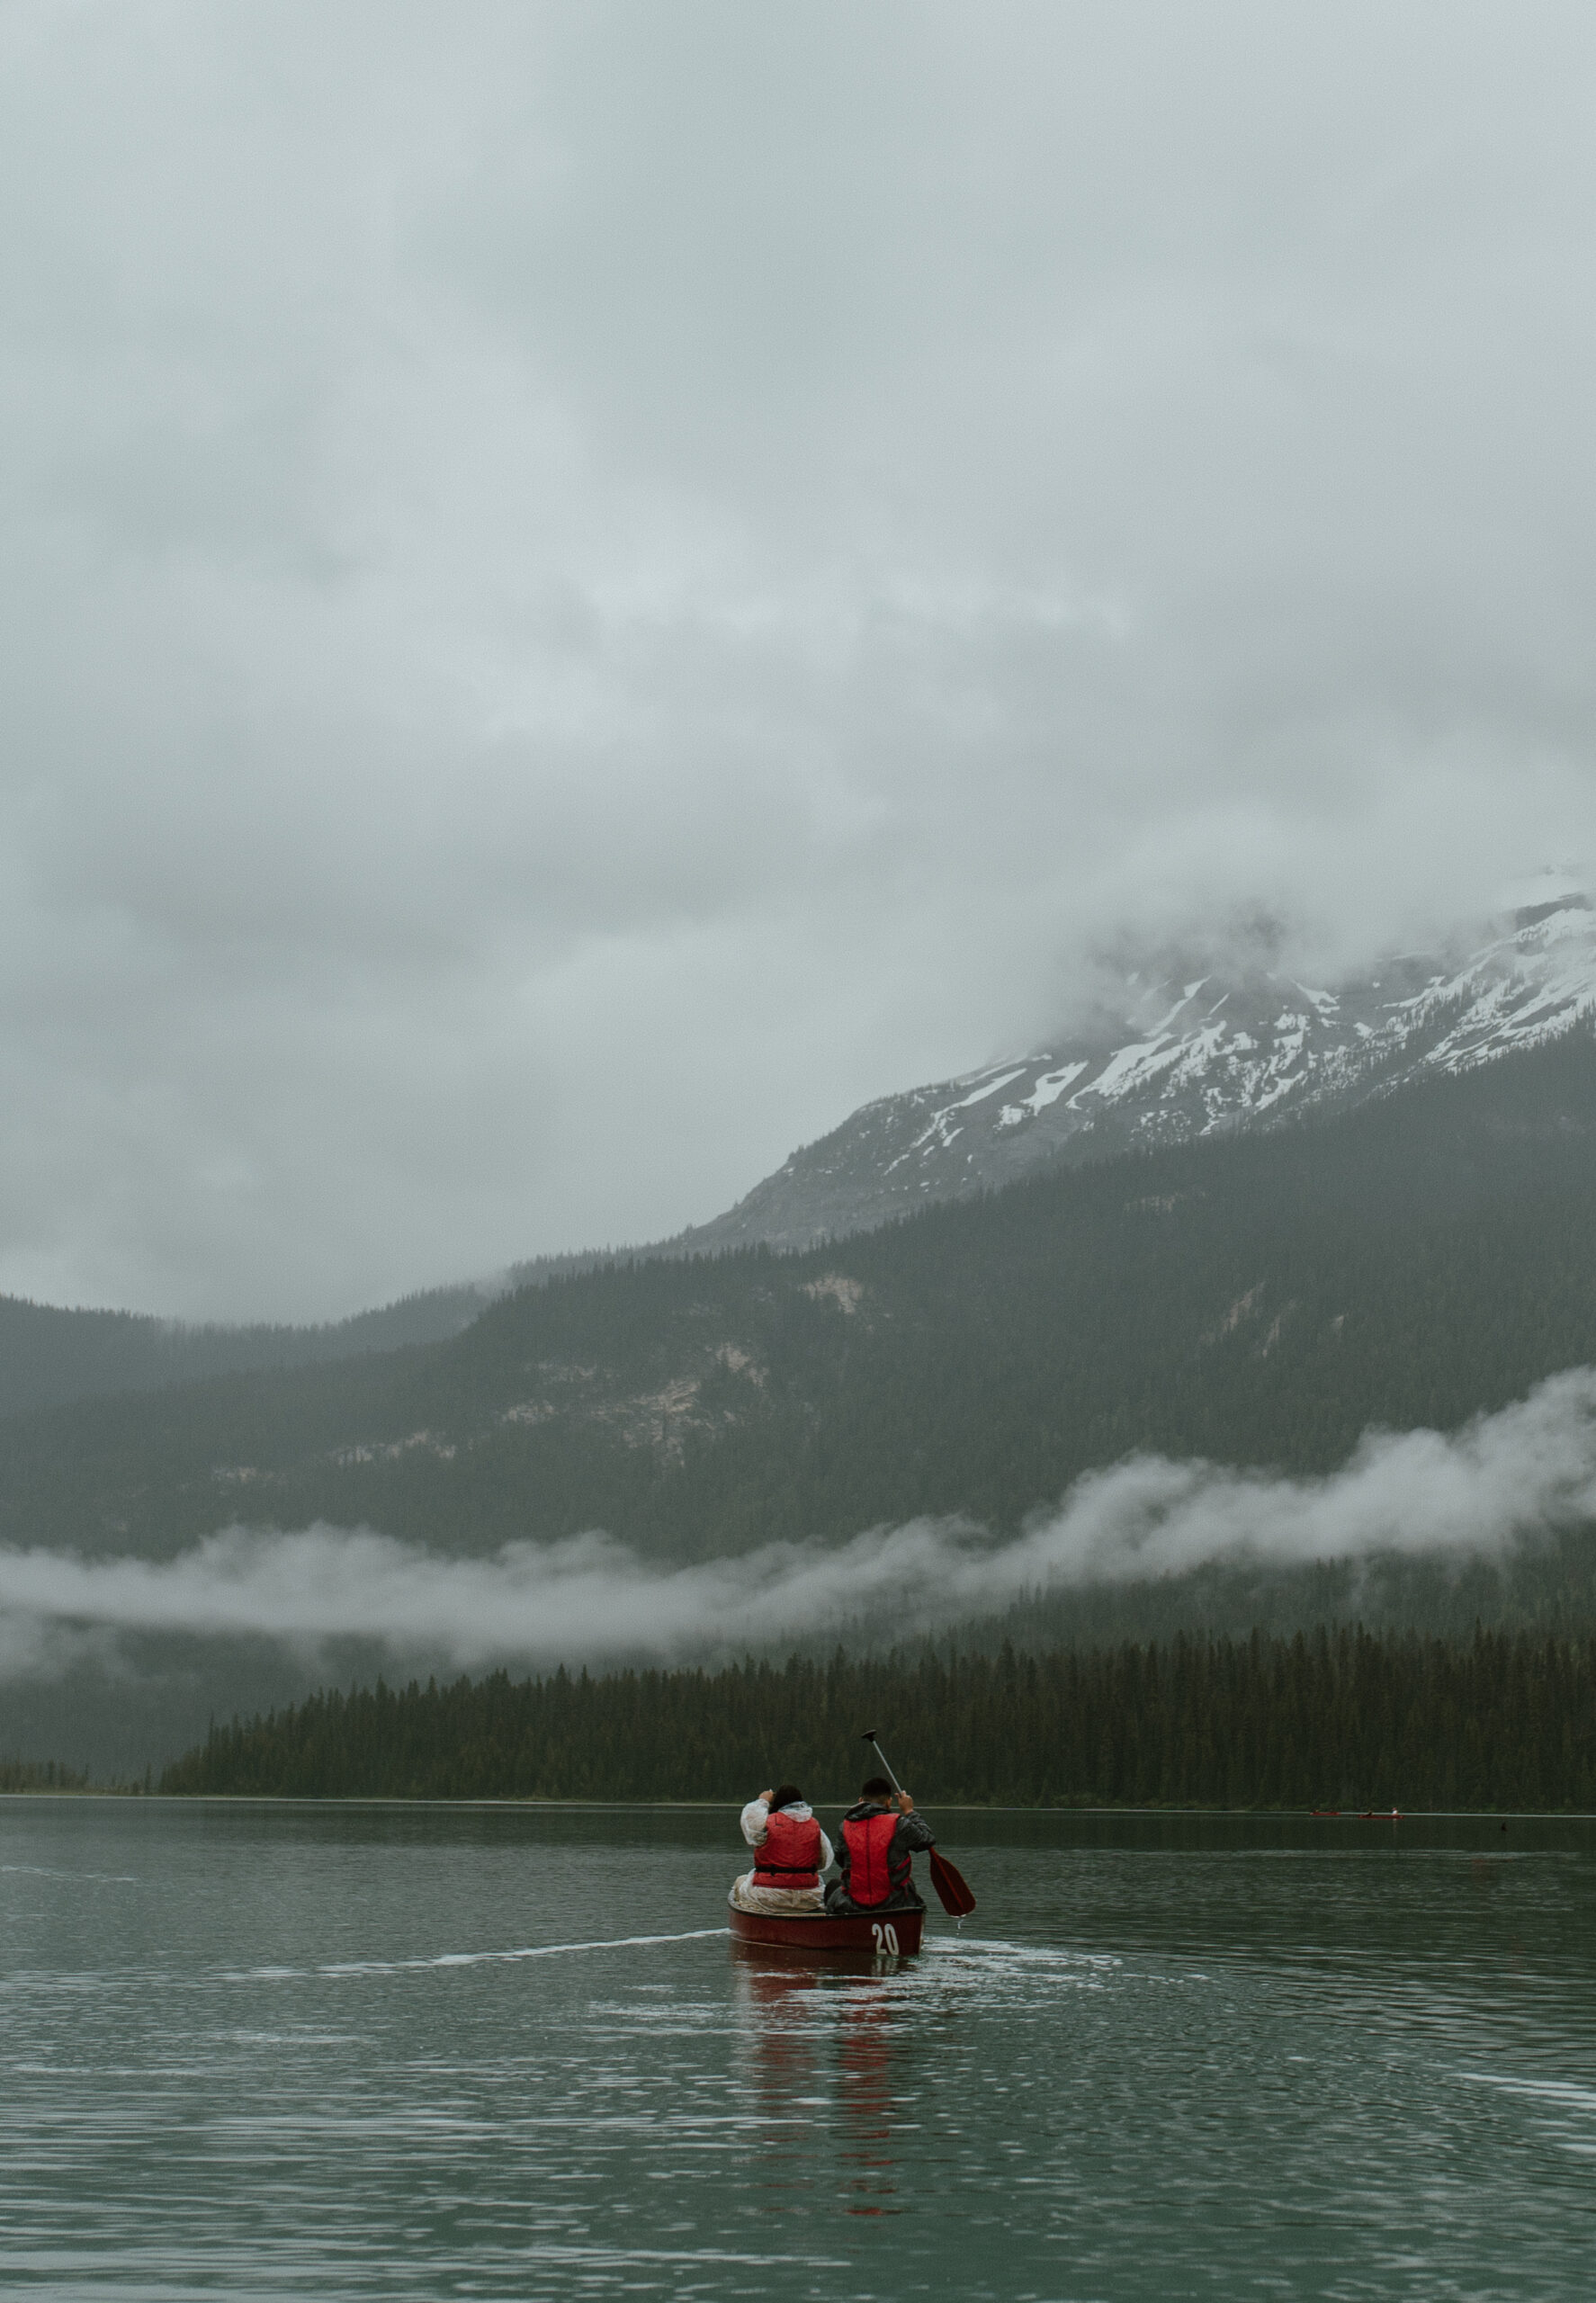 couple canoeing on gloomy day at Emerald Lake, BC, Canada